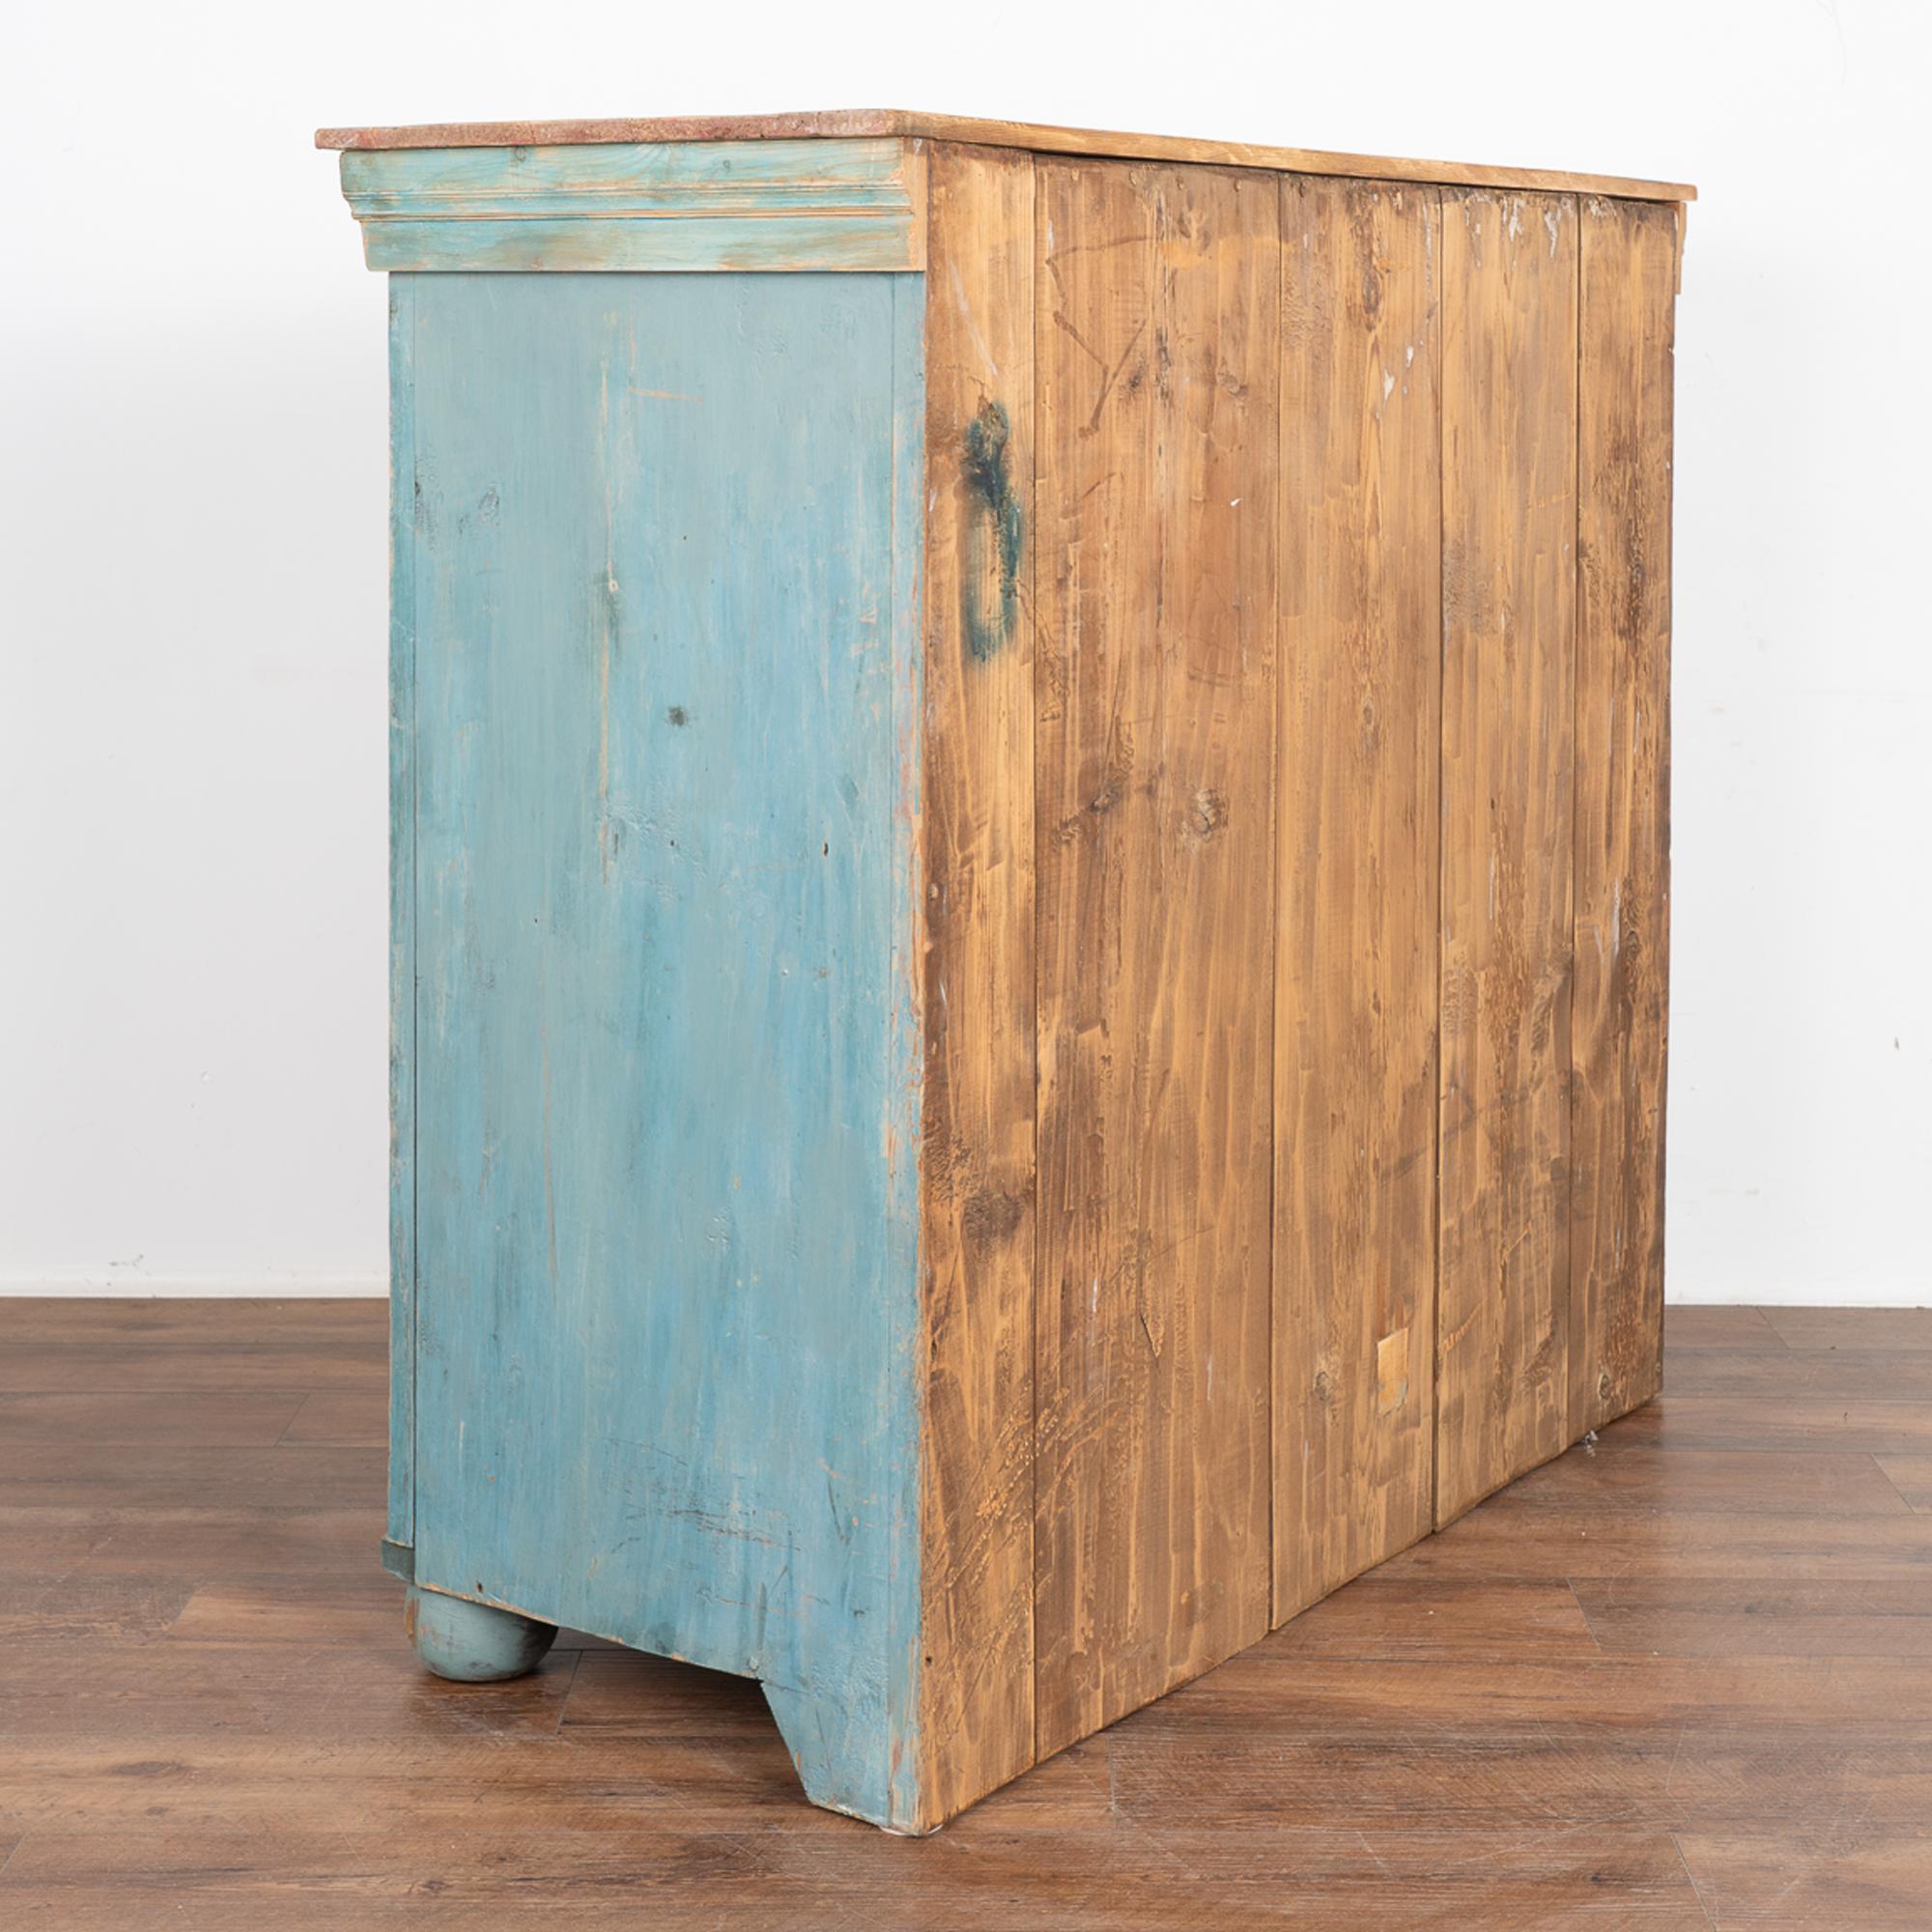 Original Blue Painted Sideboard Cabinet, Sweden dated 1843 For Sale 3